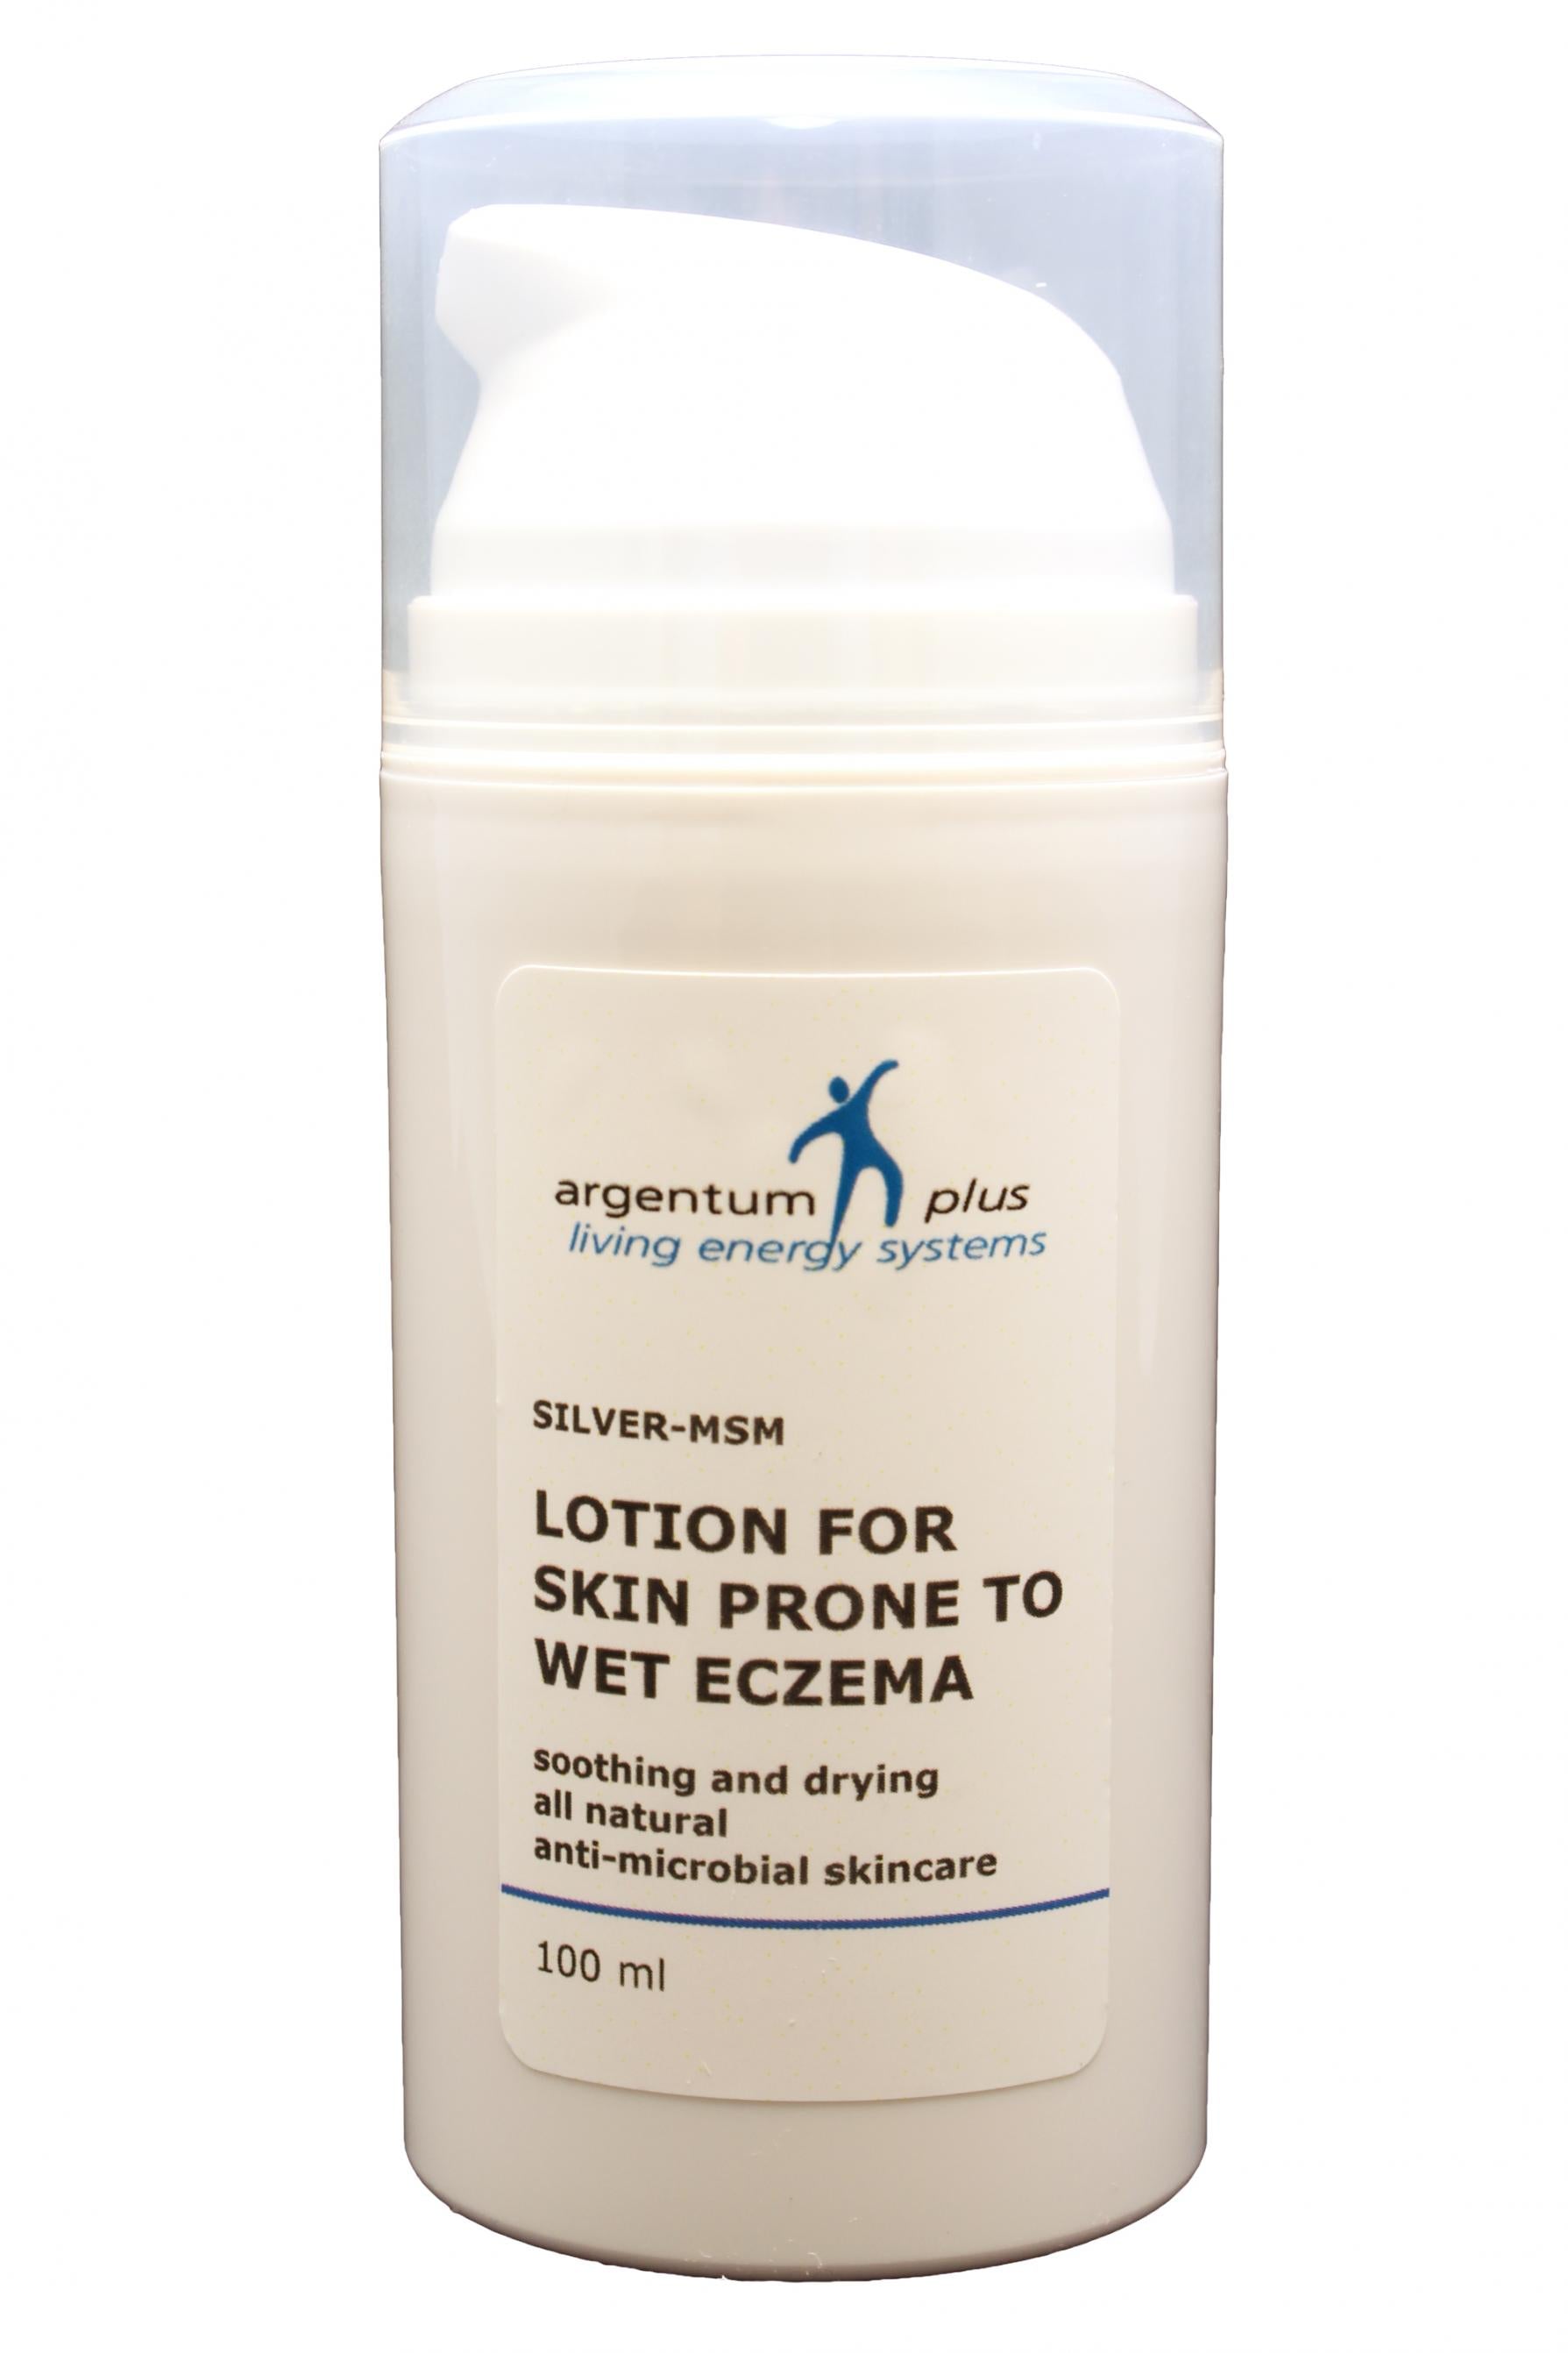 Argentum Plus Silver-MSM Lotion for Skin Prone to WET Eczema 100ml